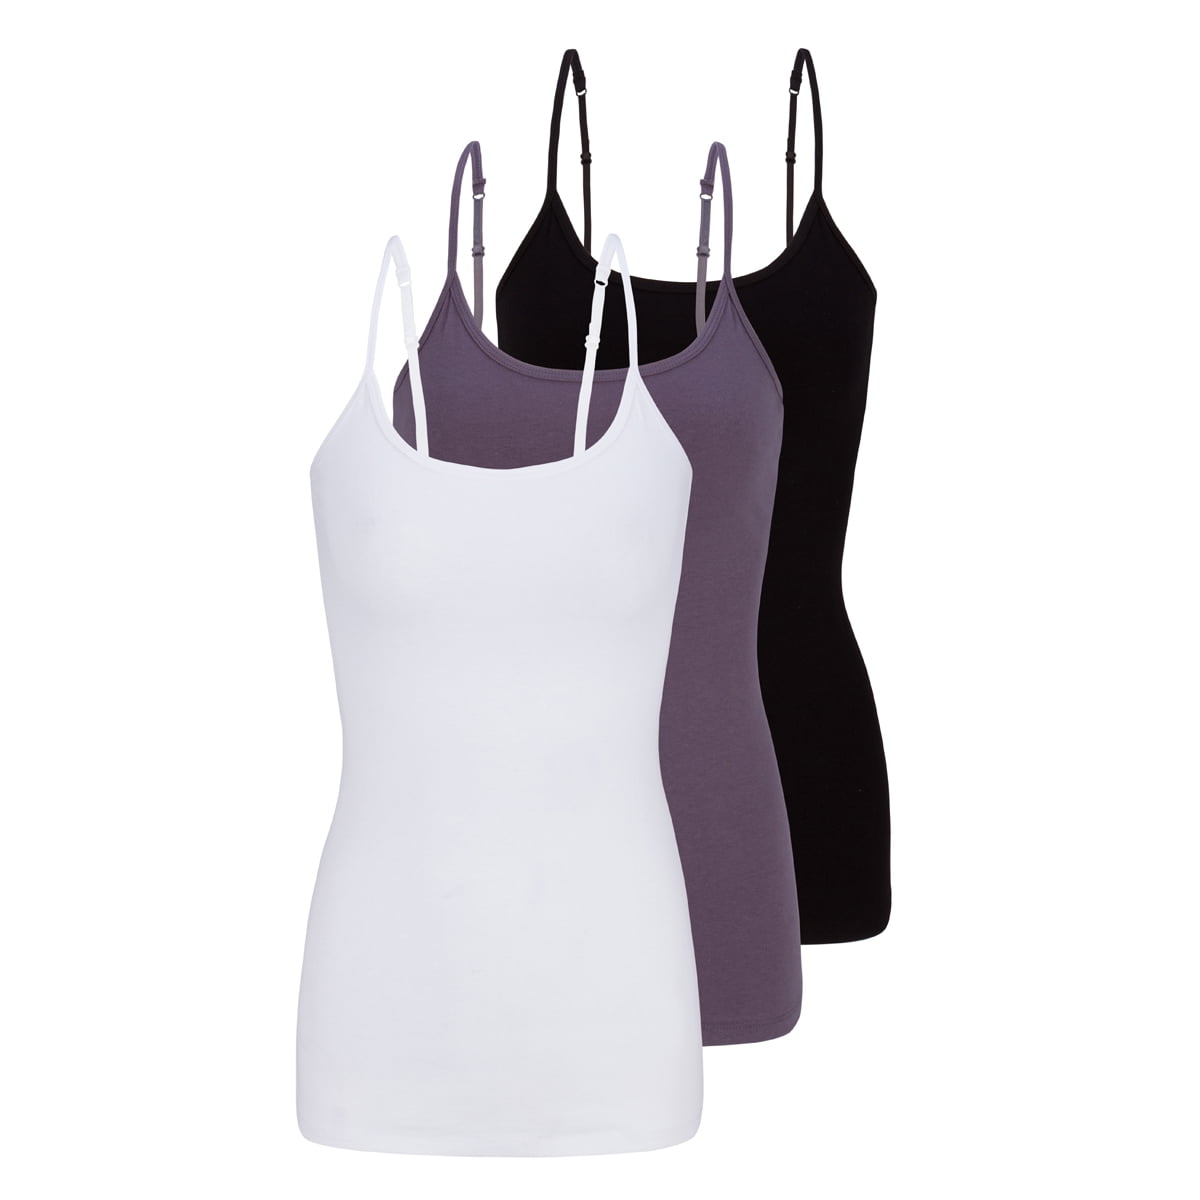 VASLANDA 2 Packs Women's Cotton Camisole Adjustable Strap Tank Tops with  Built in Shelf Bra Stretch Undershirts for Summer